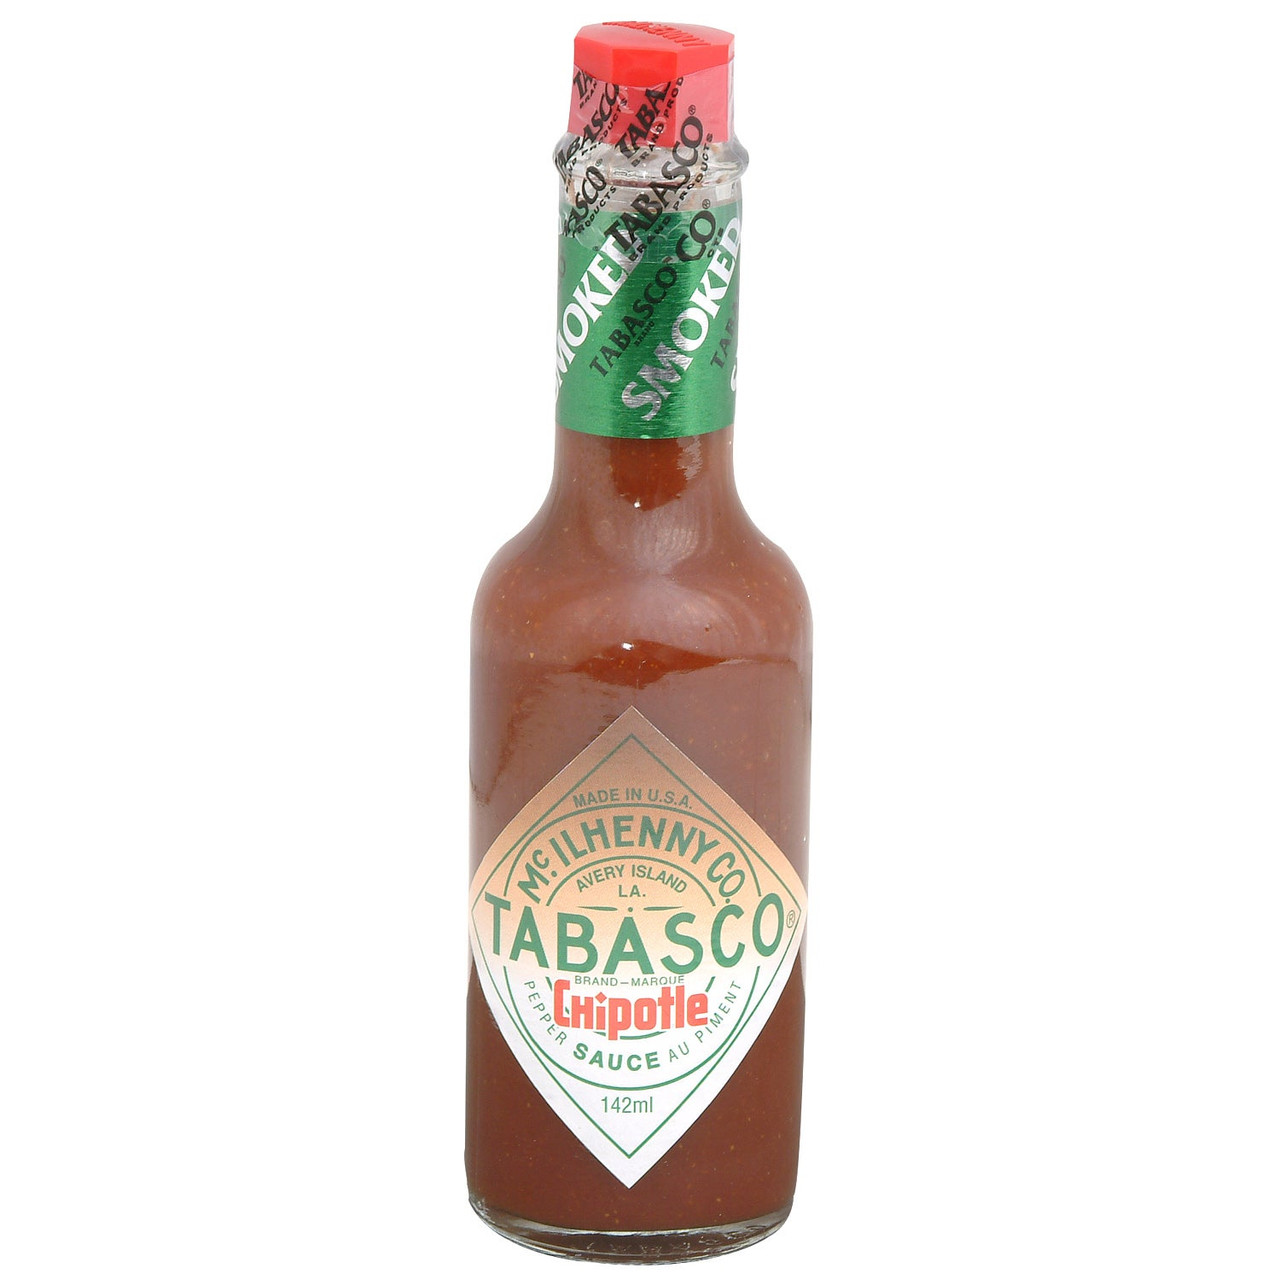 Tabasco Hot Chipotle Pepper Tabasco Sauce | 142ML/Unit, 12 Units/Case